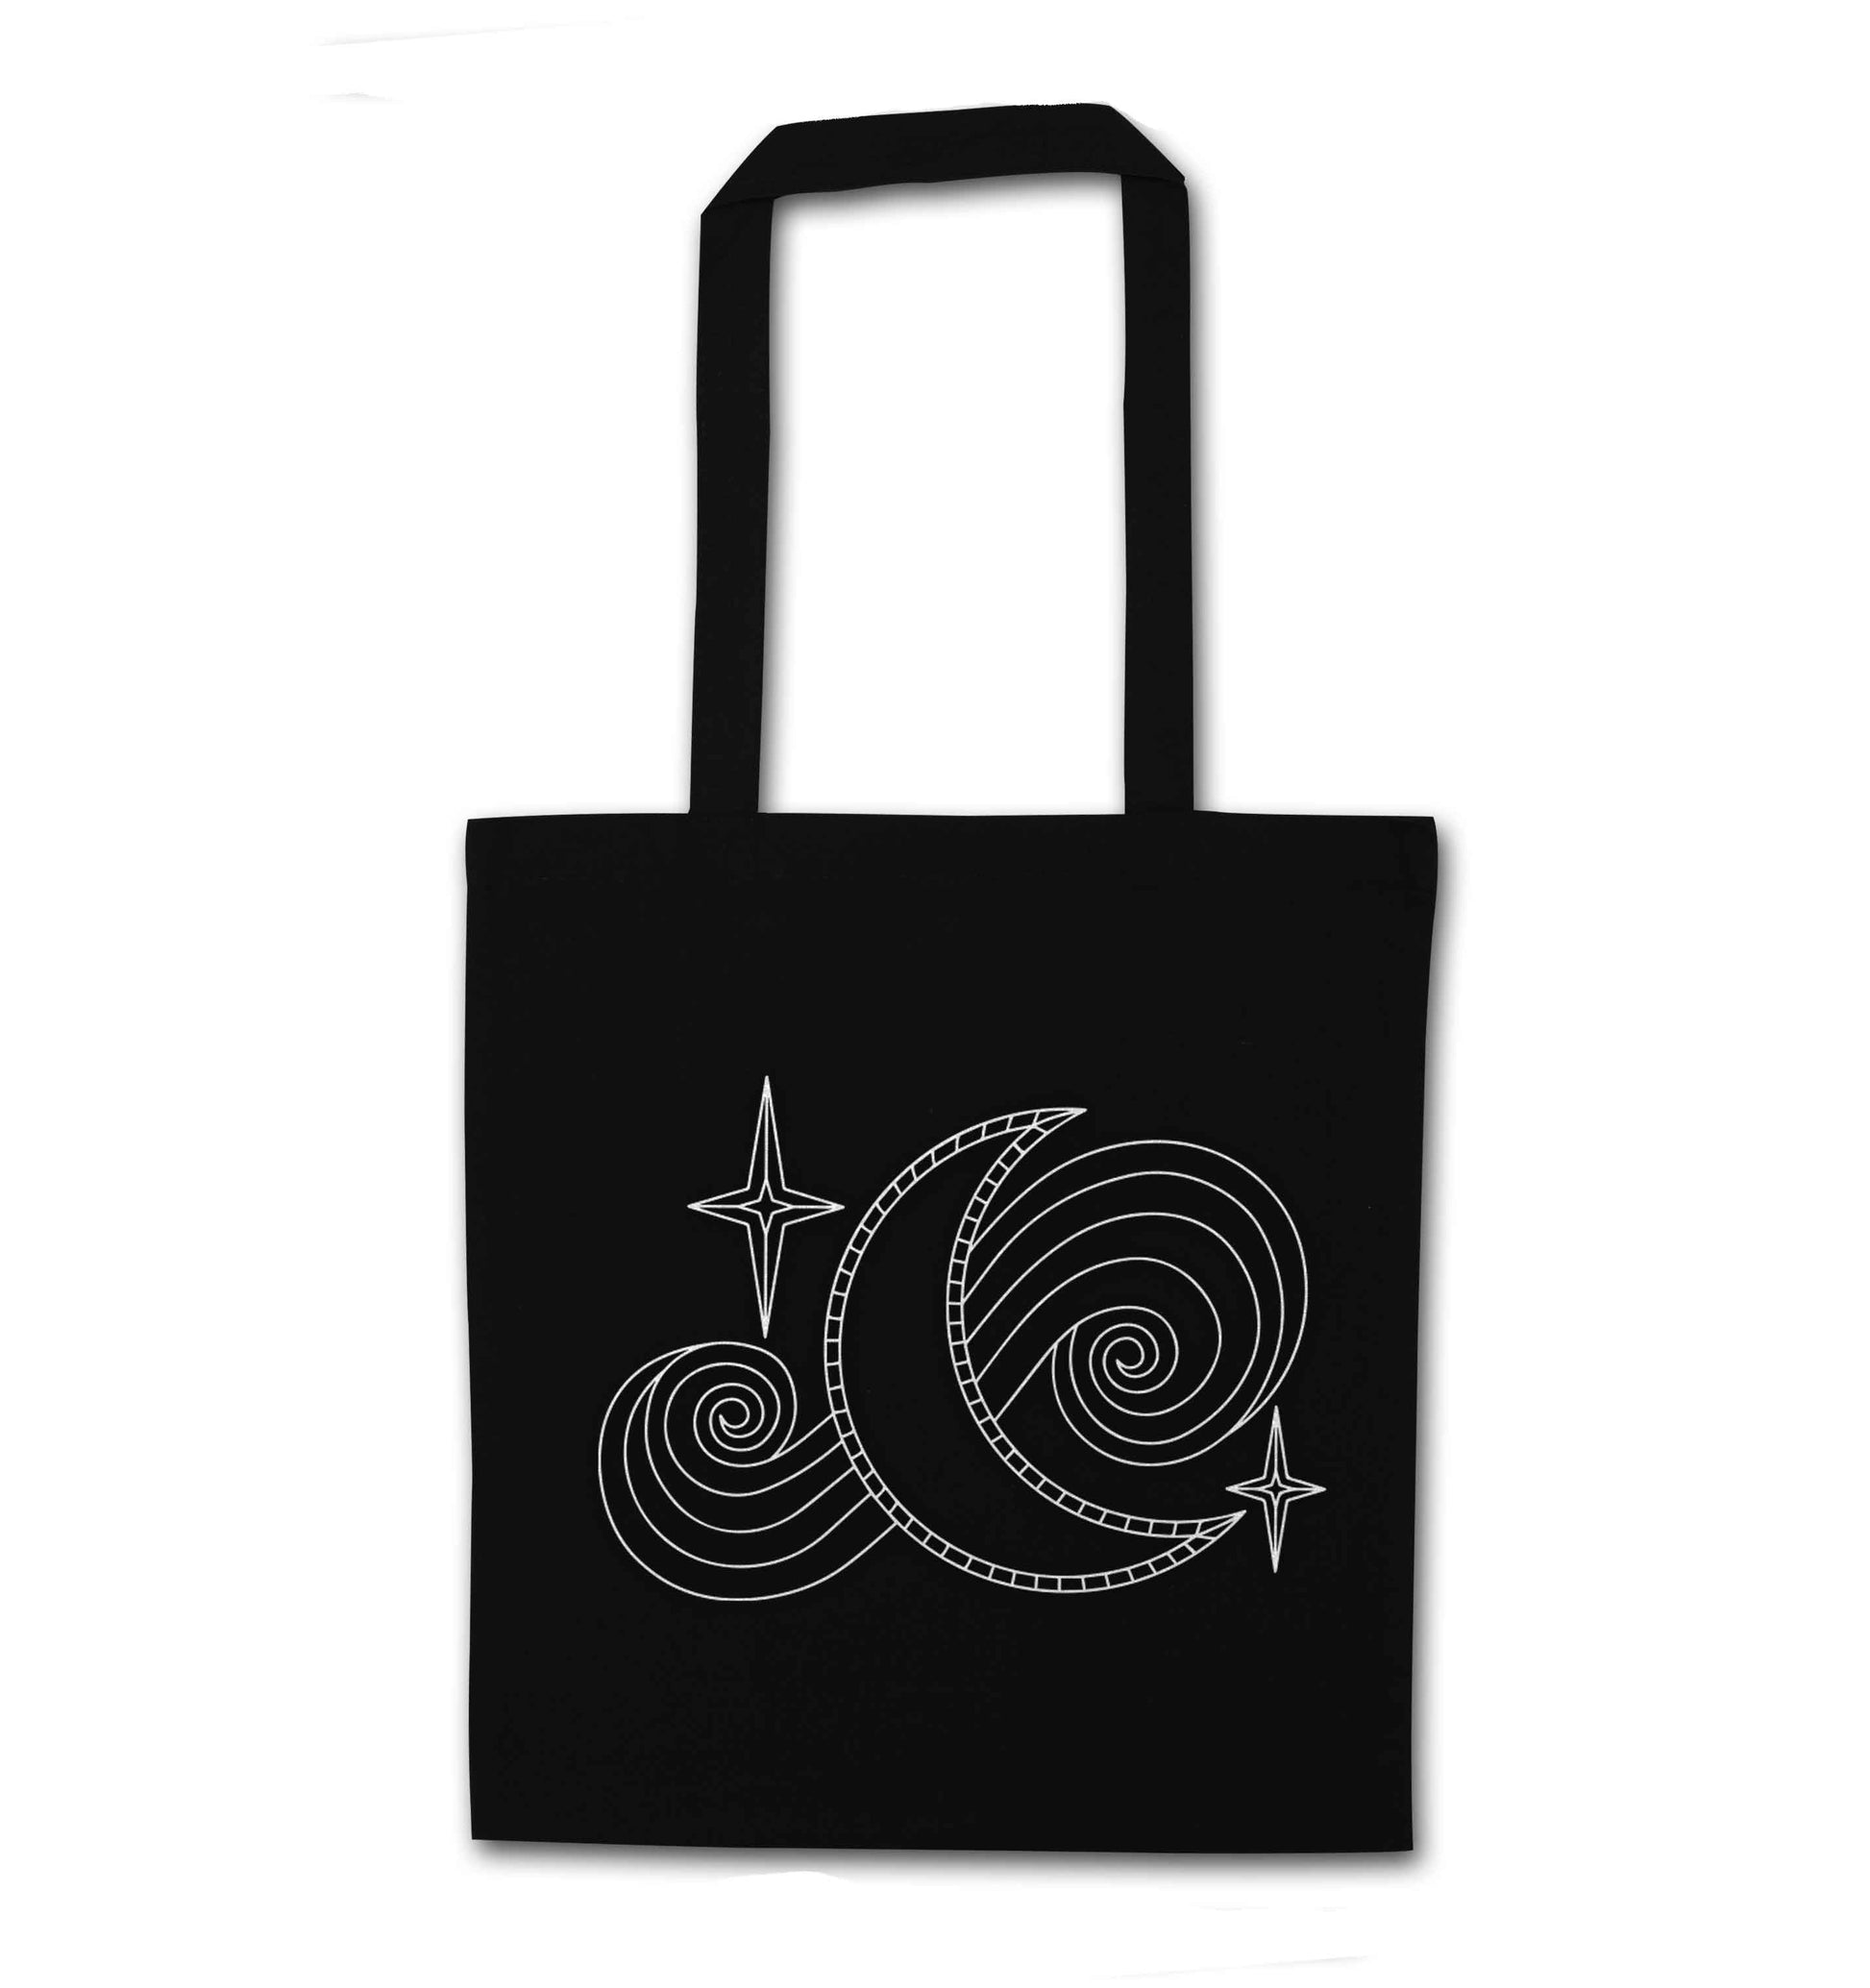 Moon and stars illustration black tote bag